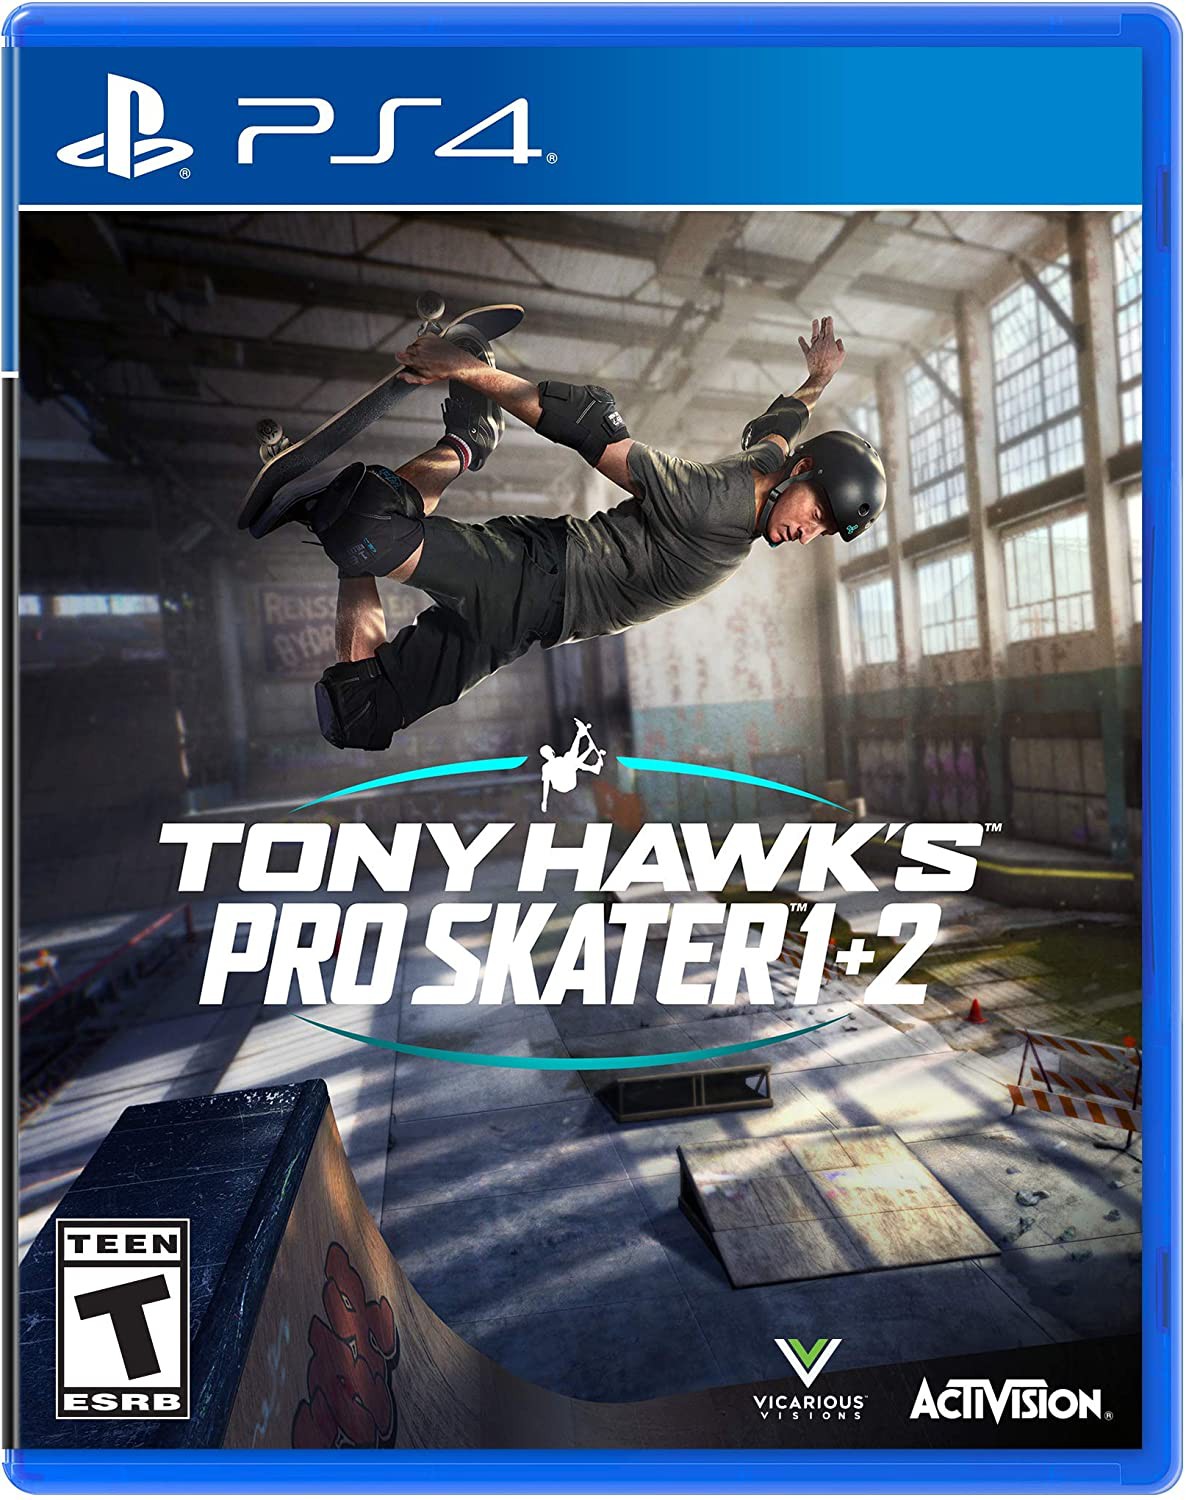 Tony Hawk's Pro Skater 4 Ps2 (PAL) (Seminovo) - Arena Games - Loja Geek